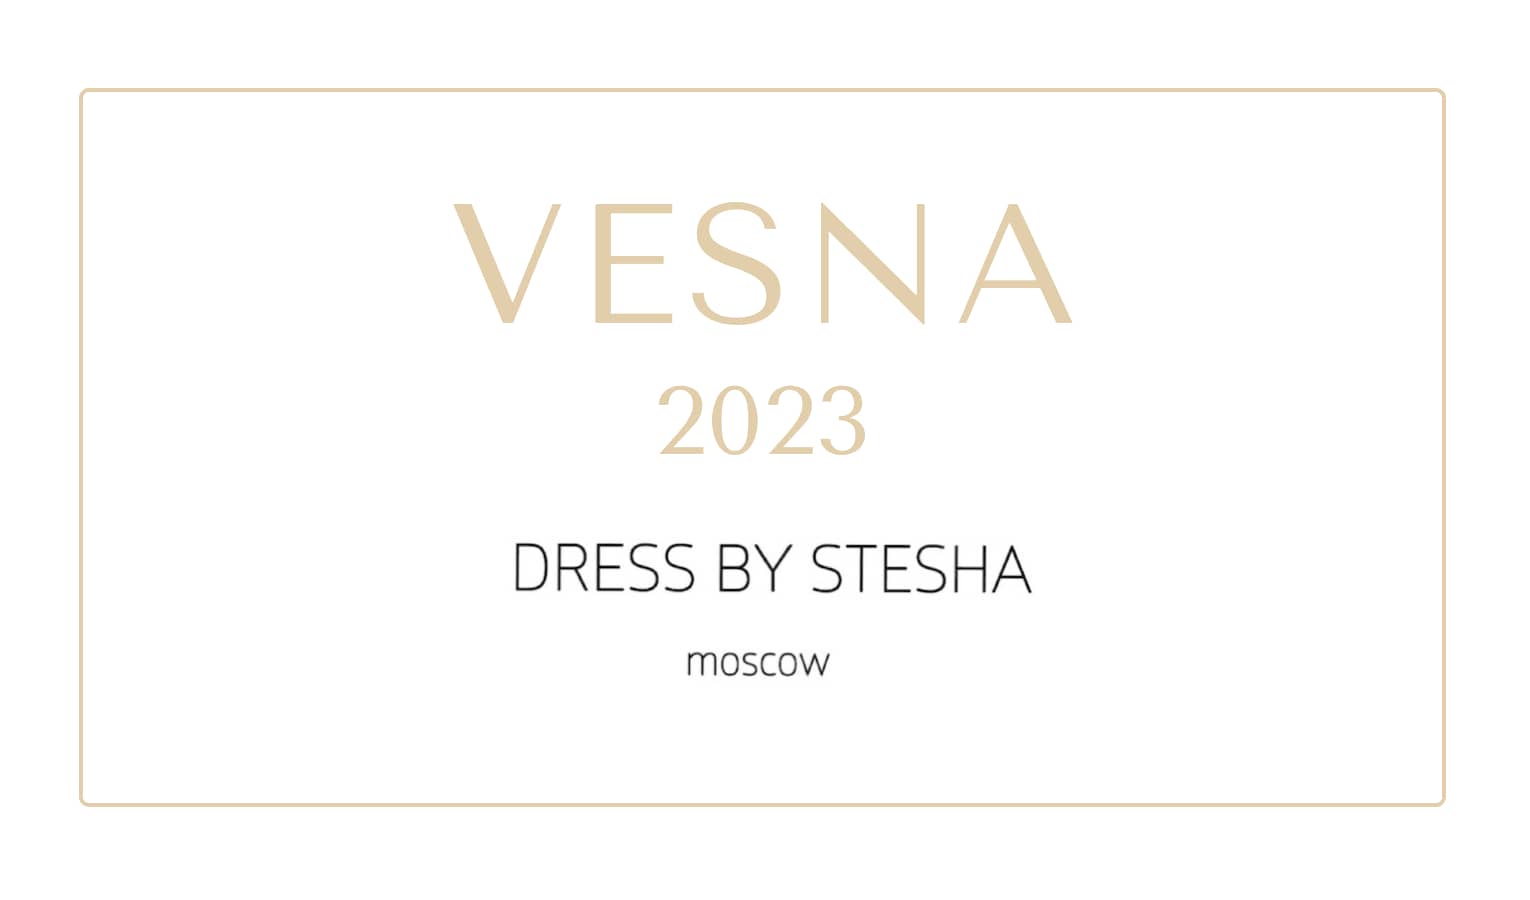 Vesna 2023